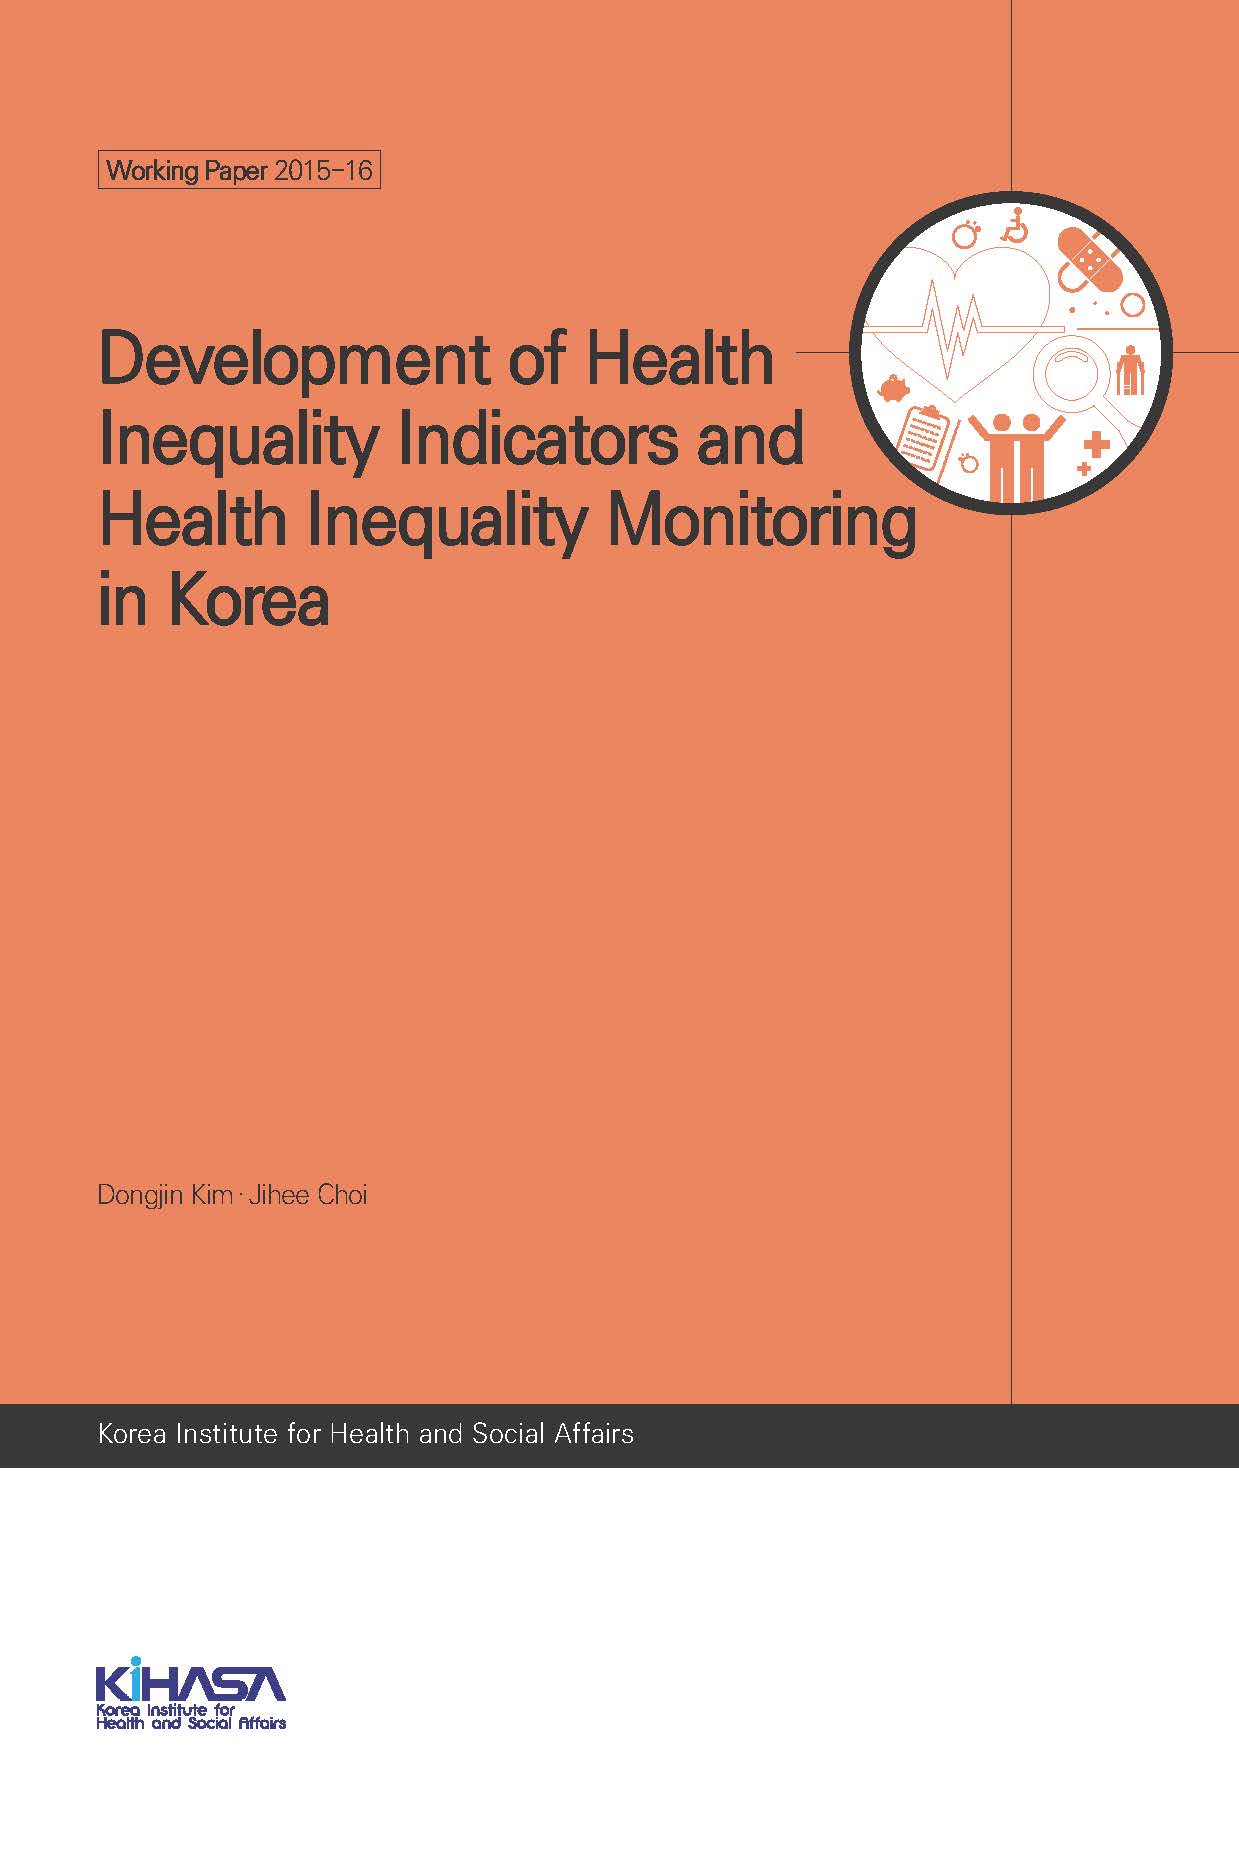 Development of Health Inequality Indicators and Health Inequality Monitoring in Korea